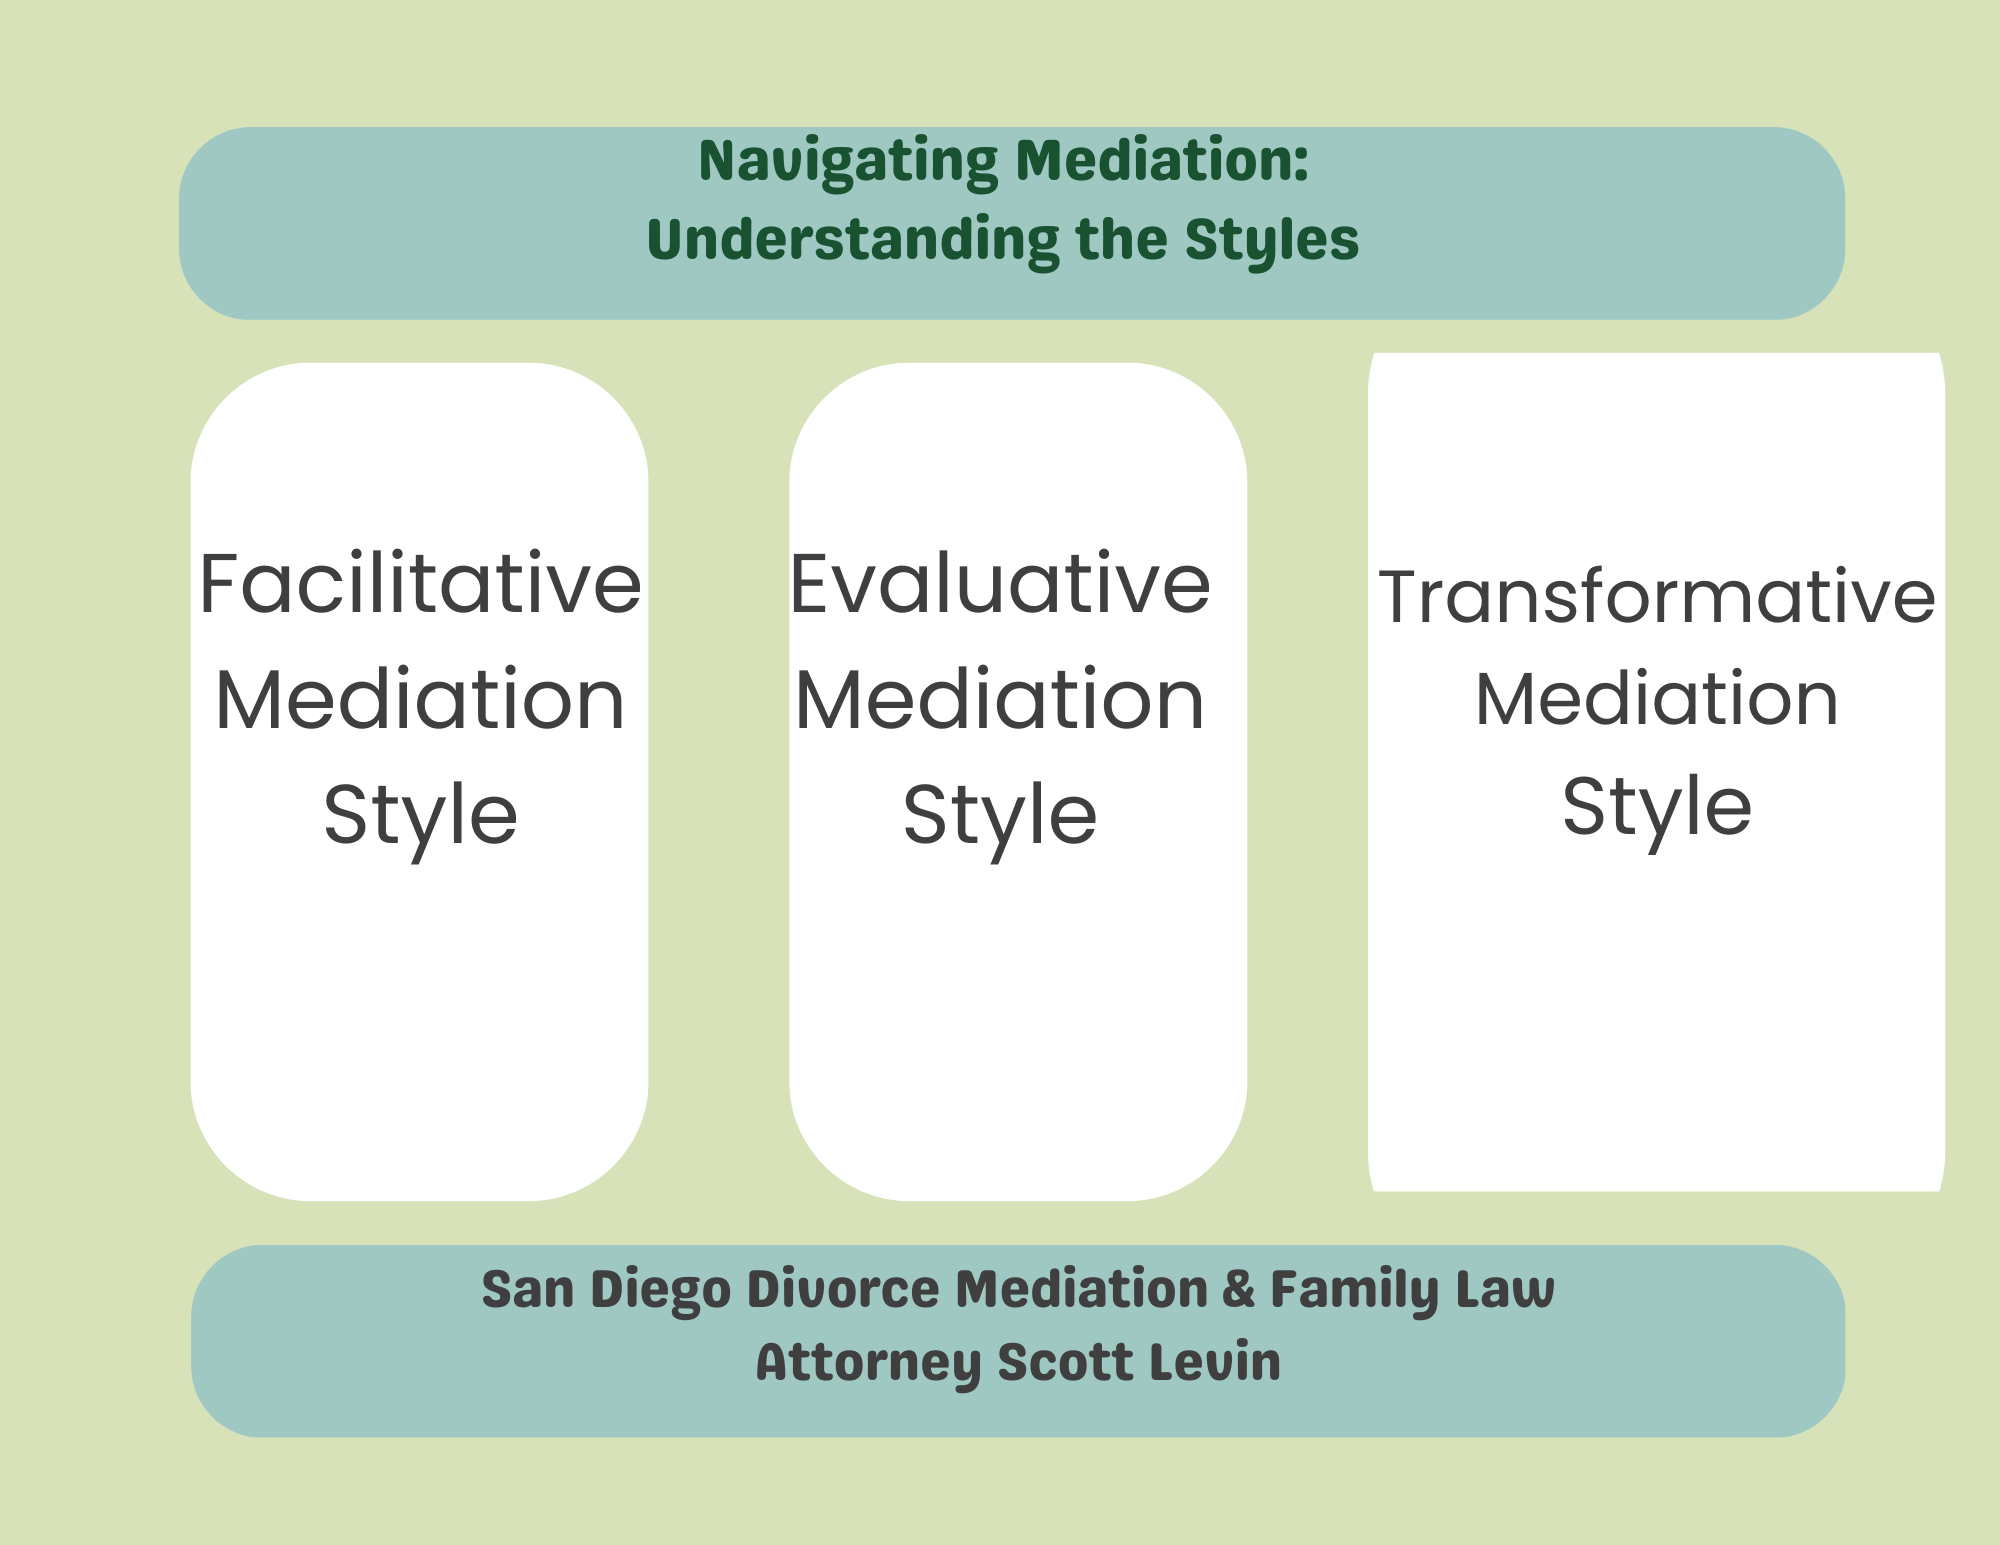 Divorce mediation styles explained